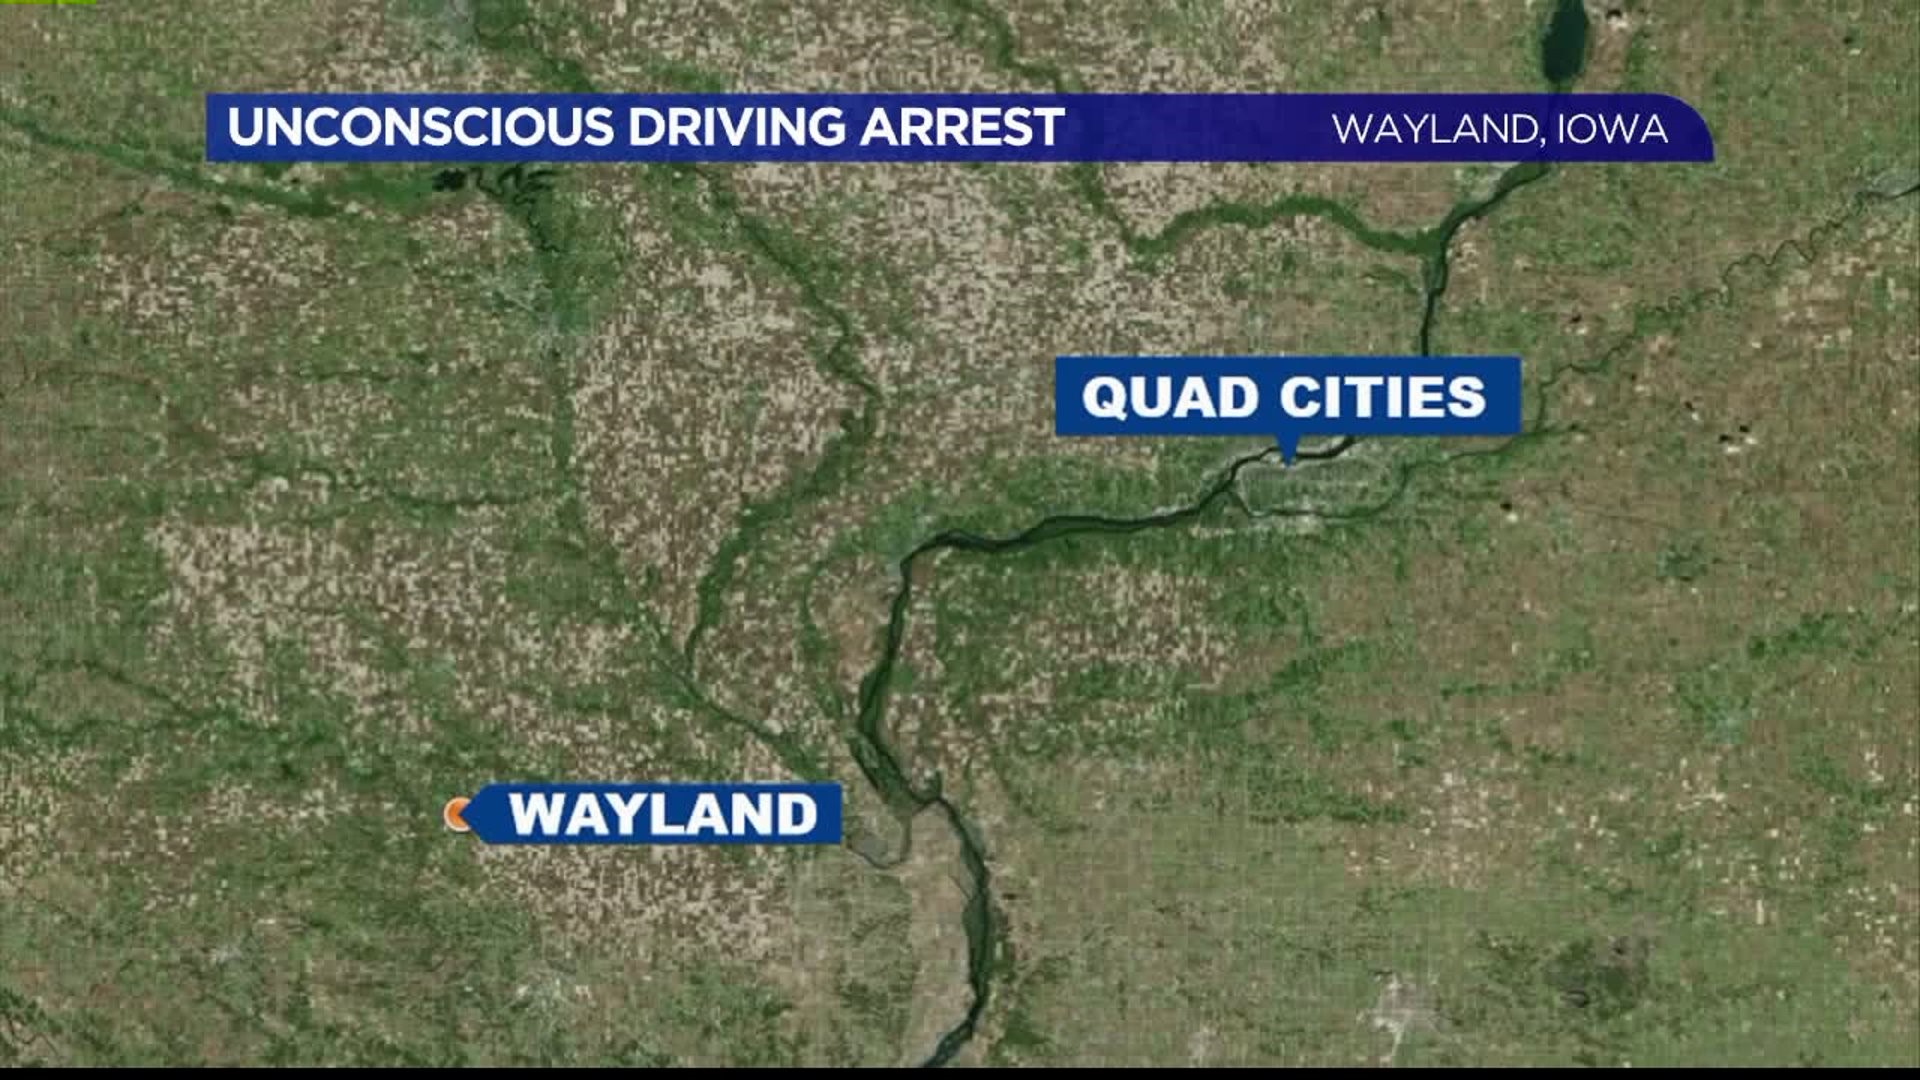 Unconscious driving arrest in Iowa